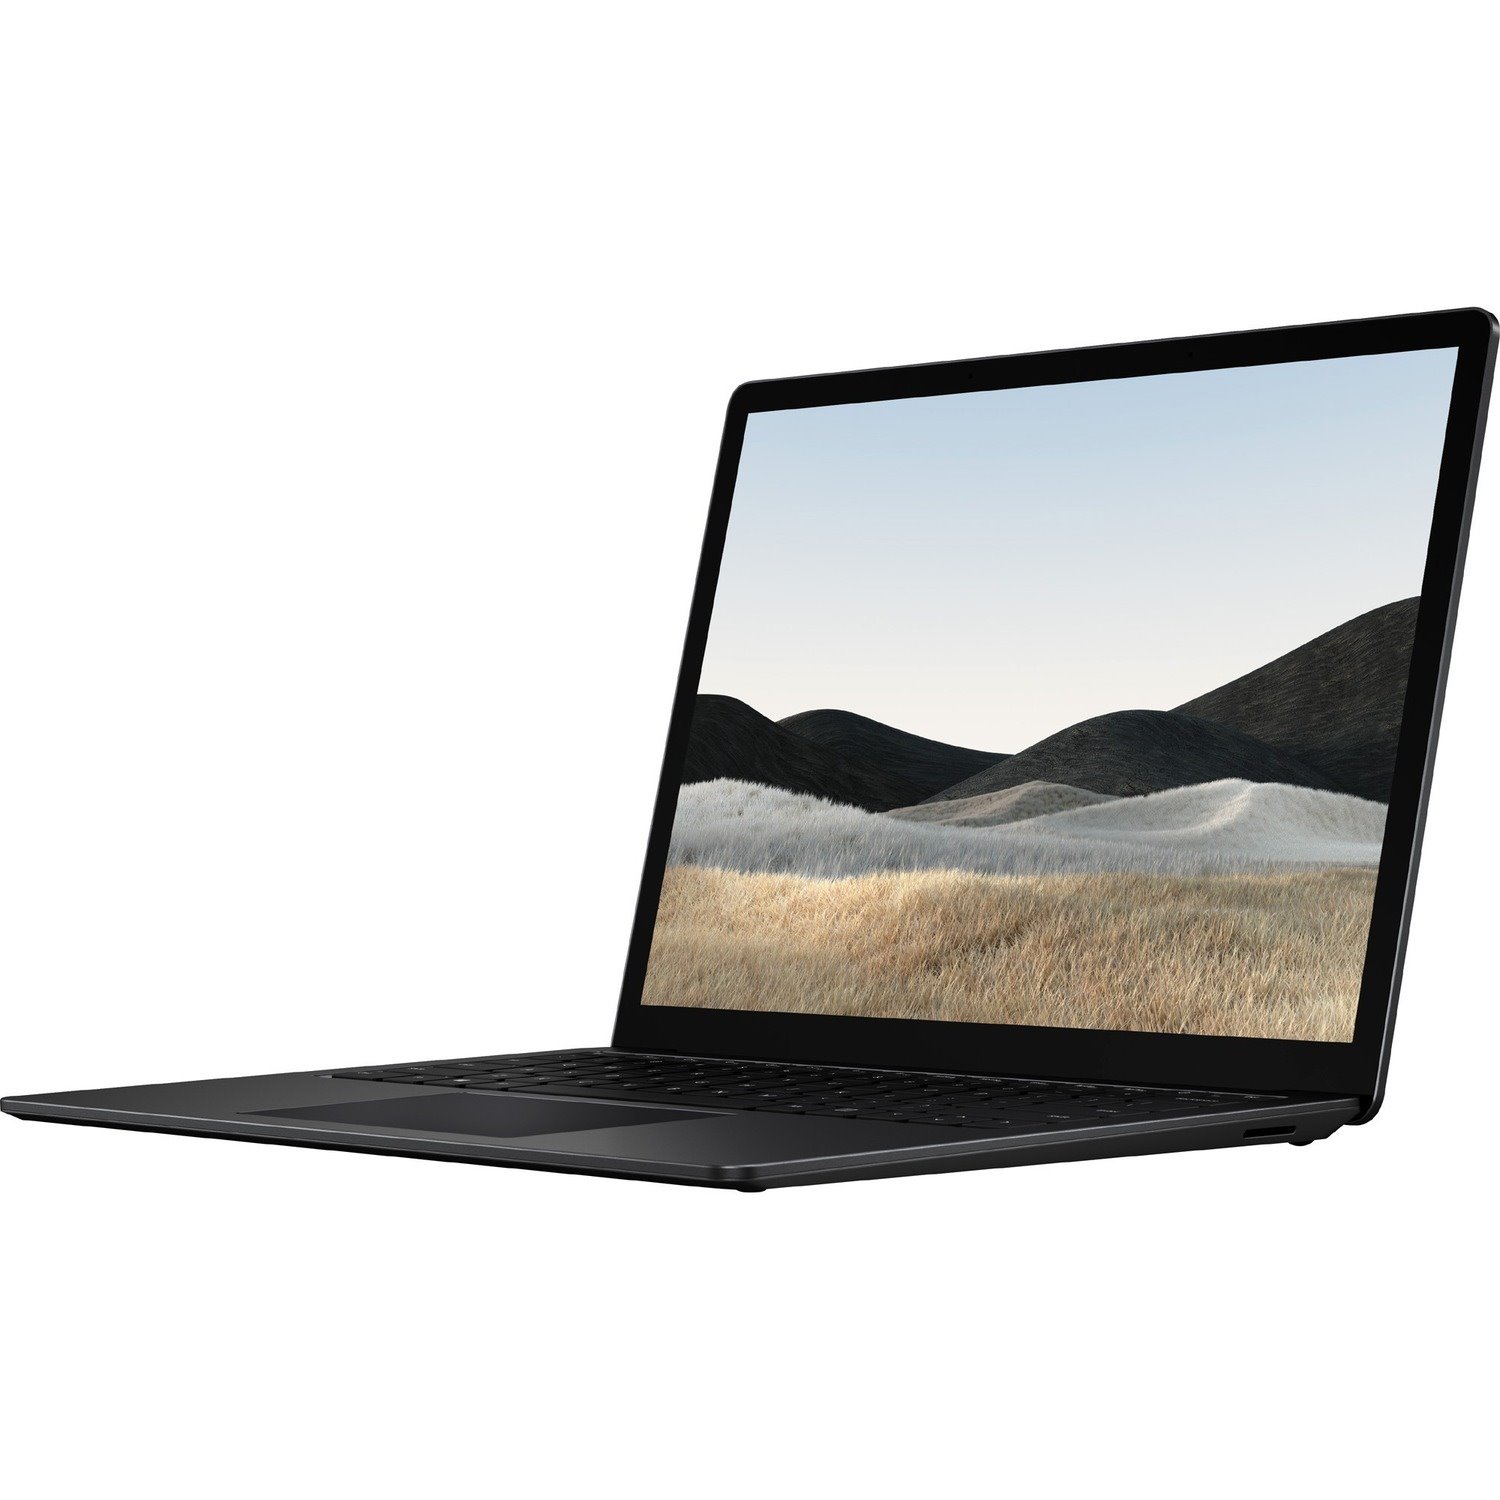 Microsoft Surface Laptop 4 34.3 cm (13.5") Touchscreen Notebook - 2256 x 1504 - Intel Core i5 11th Gen - 8 GB RAM - 256 GB SSD - Matte Black